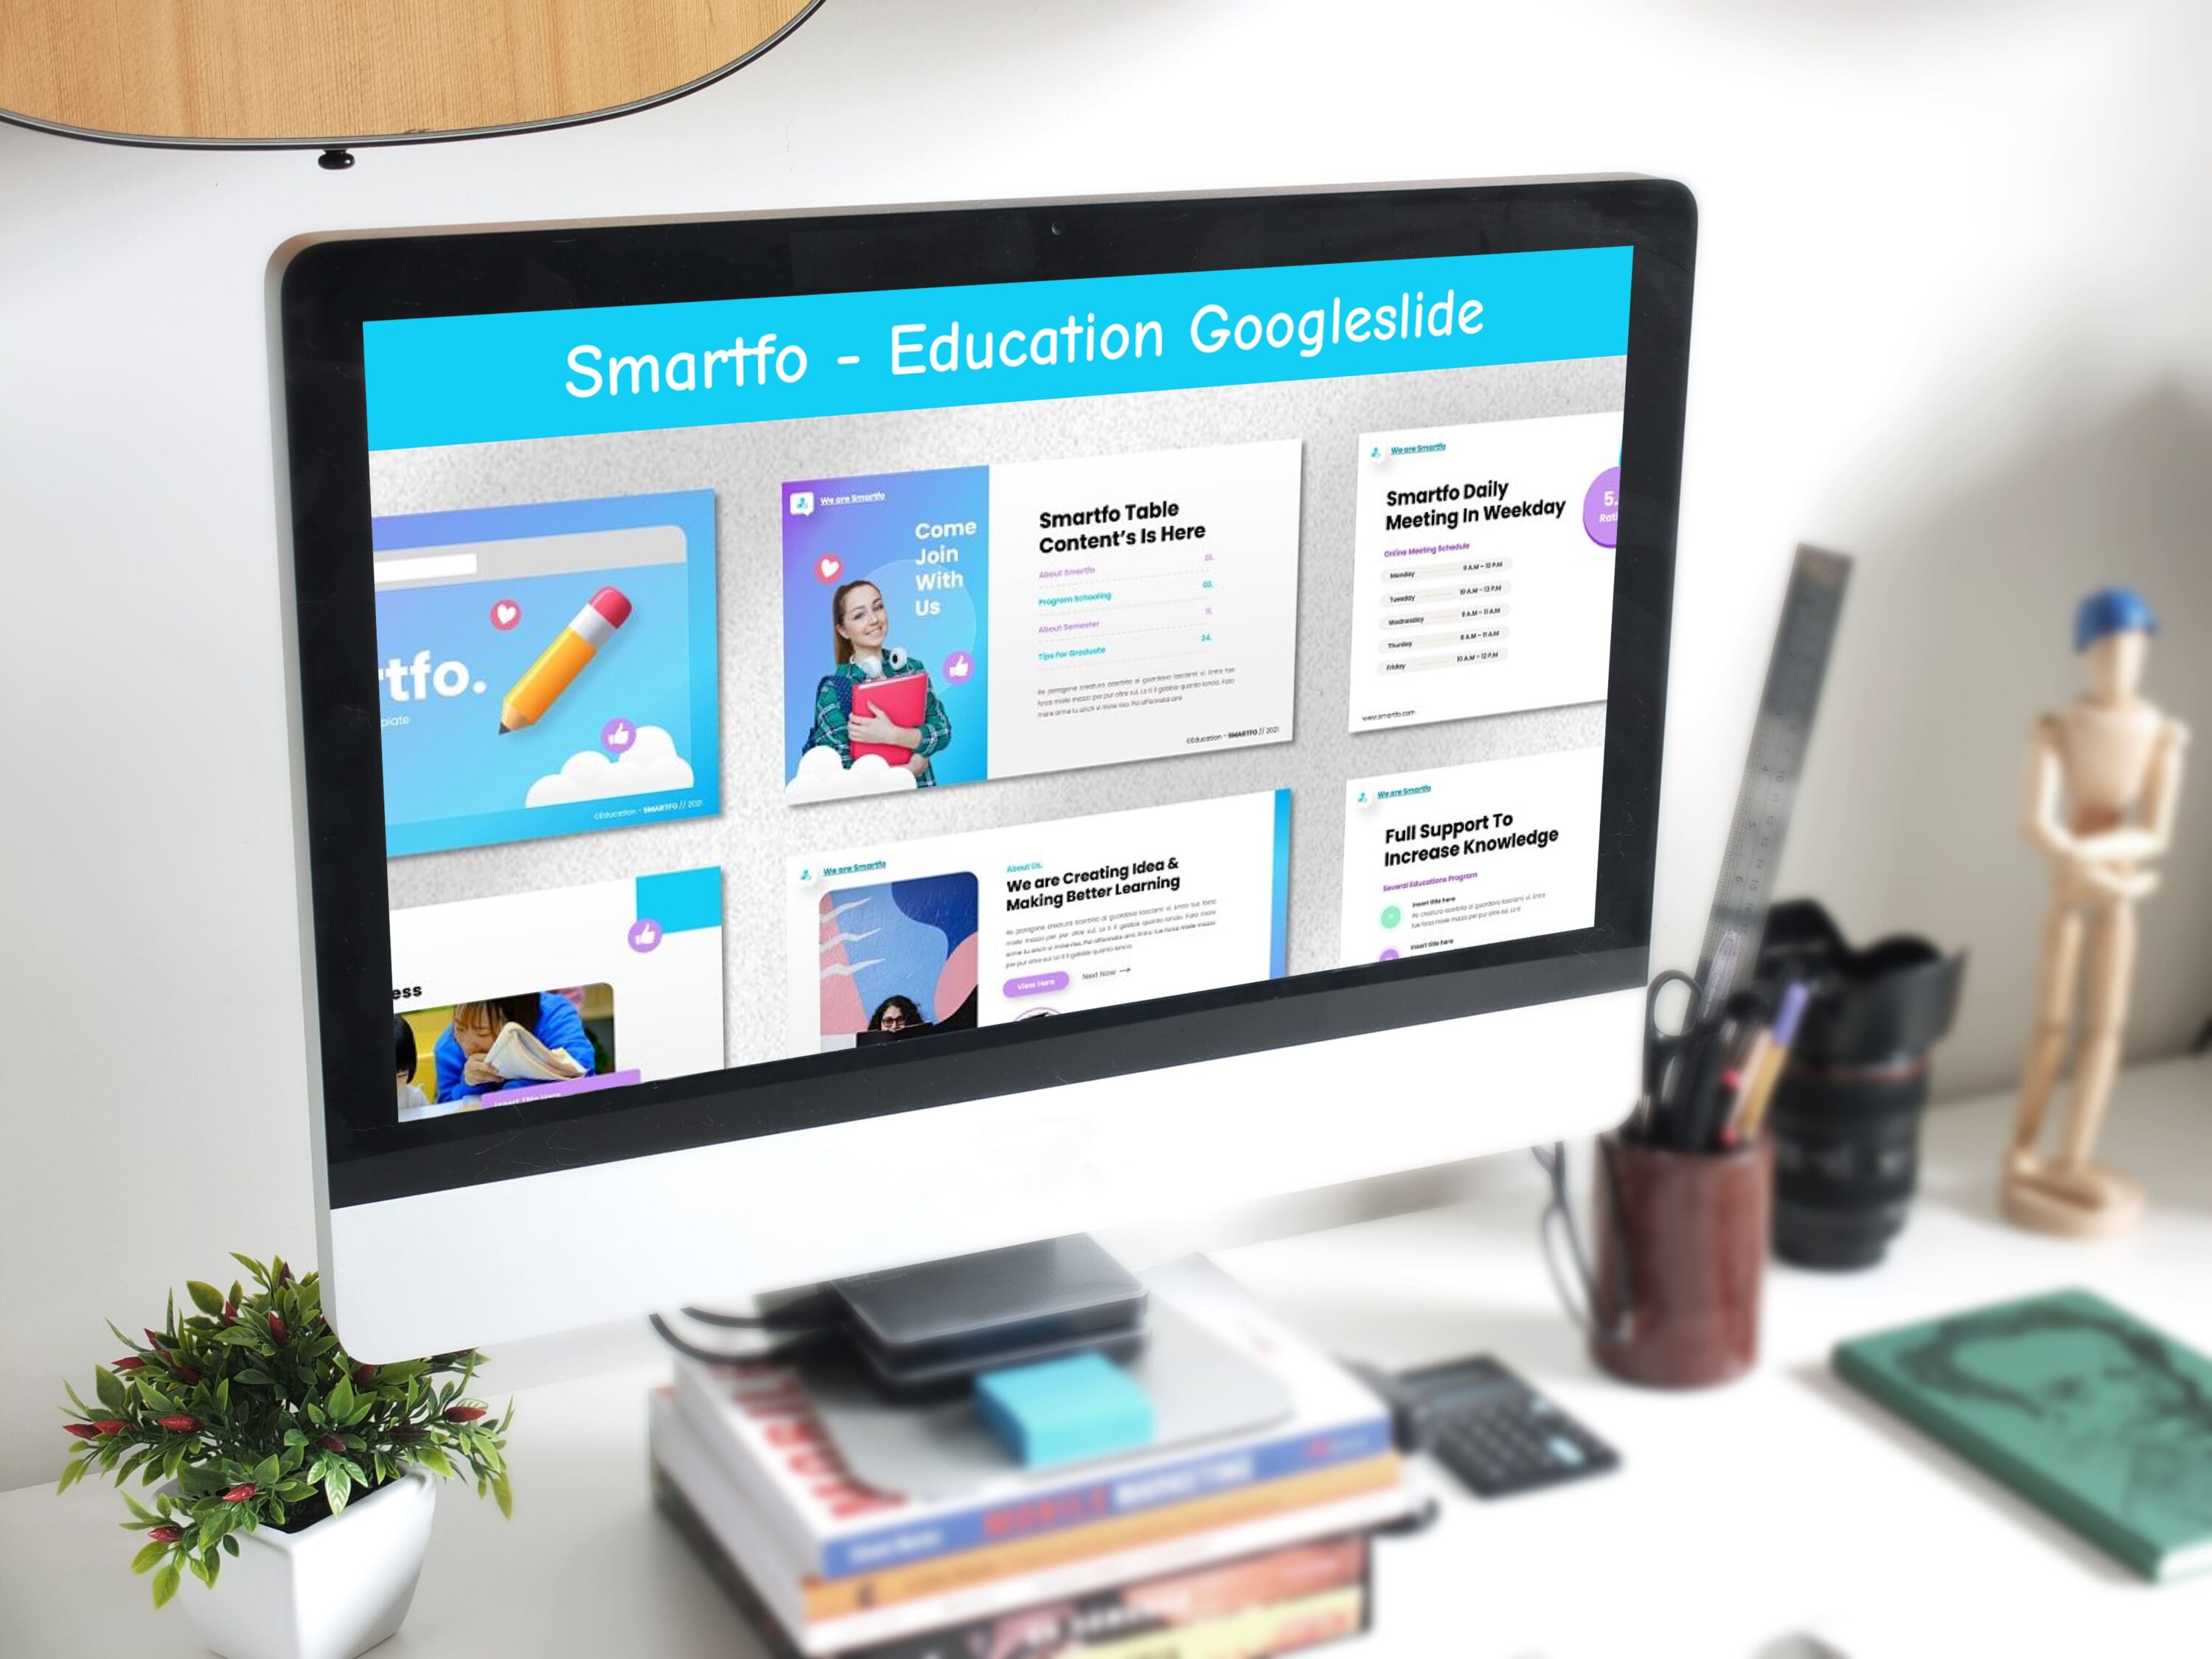 Smartfo - Education Googleslide - desktop.